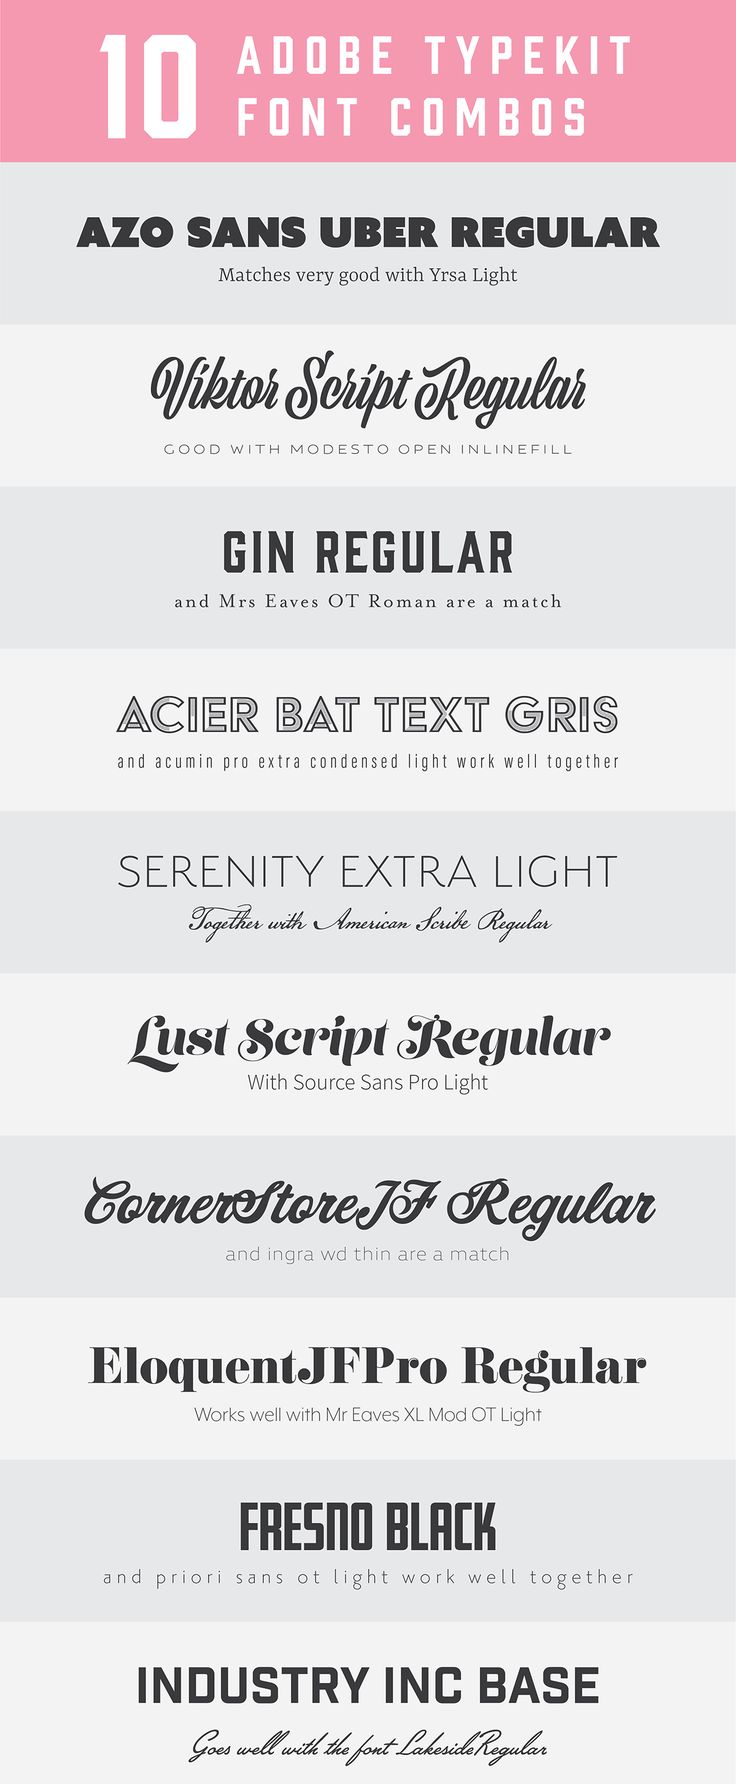 Adobe Typekit Fonts